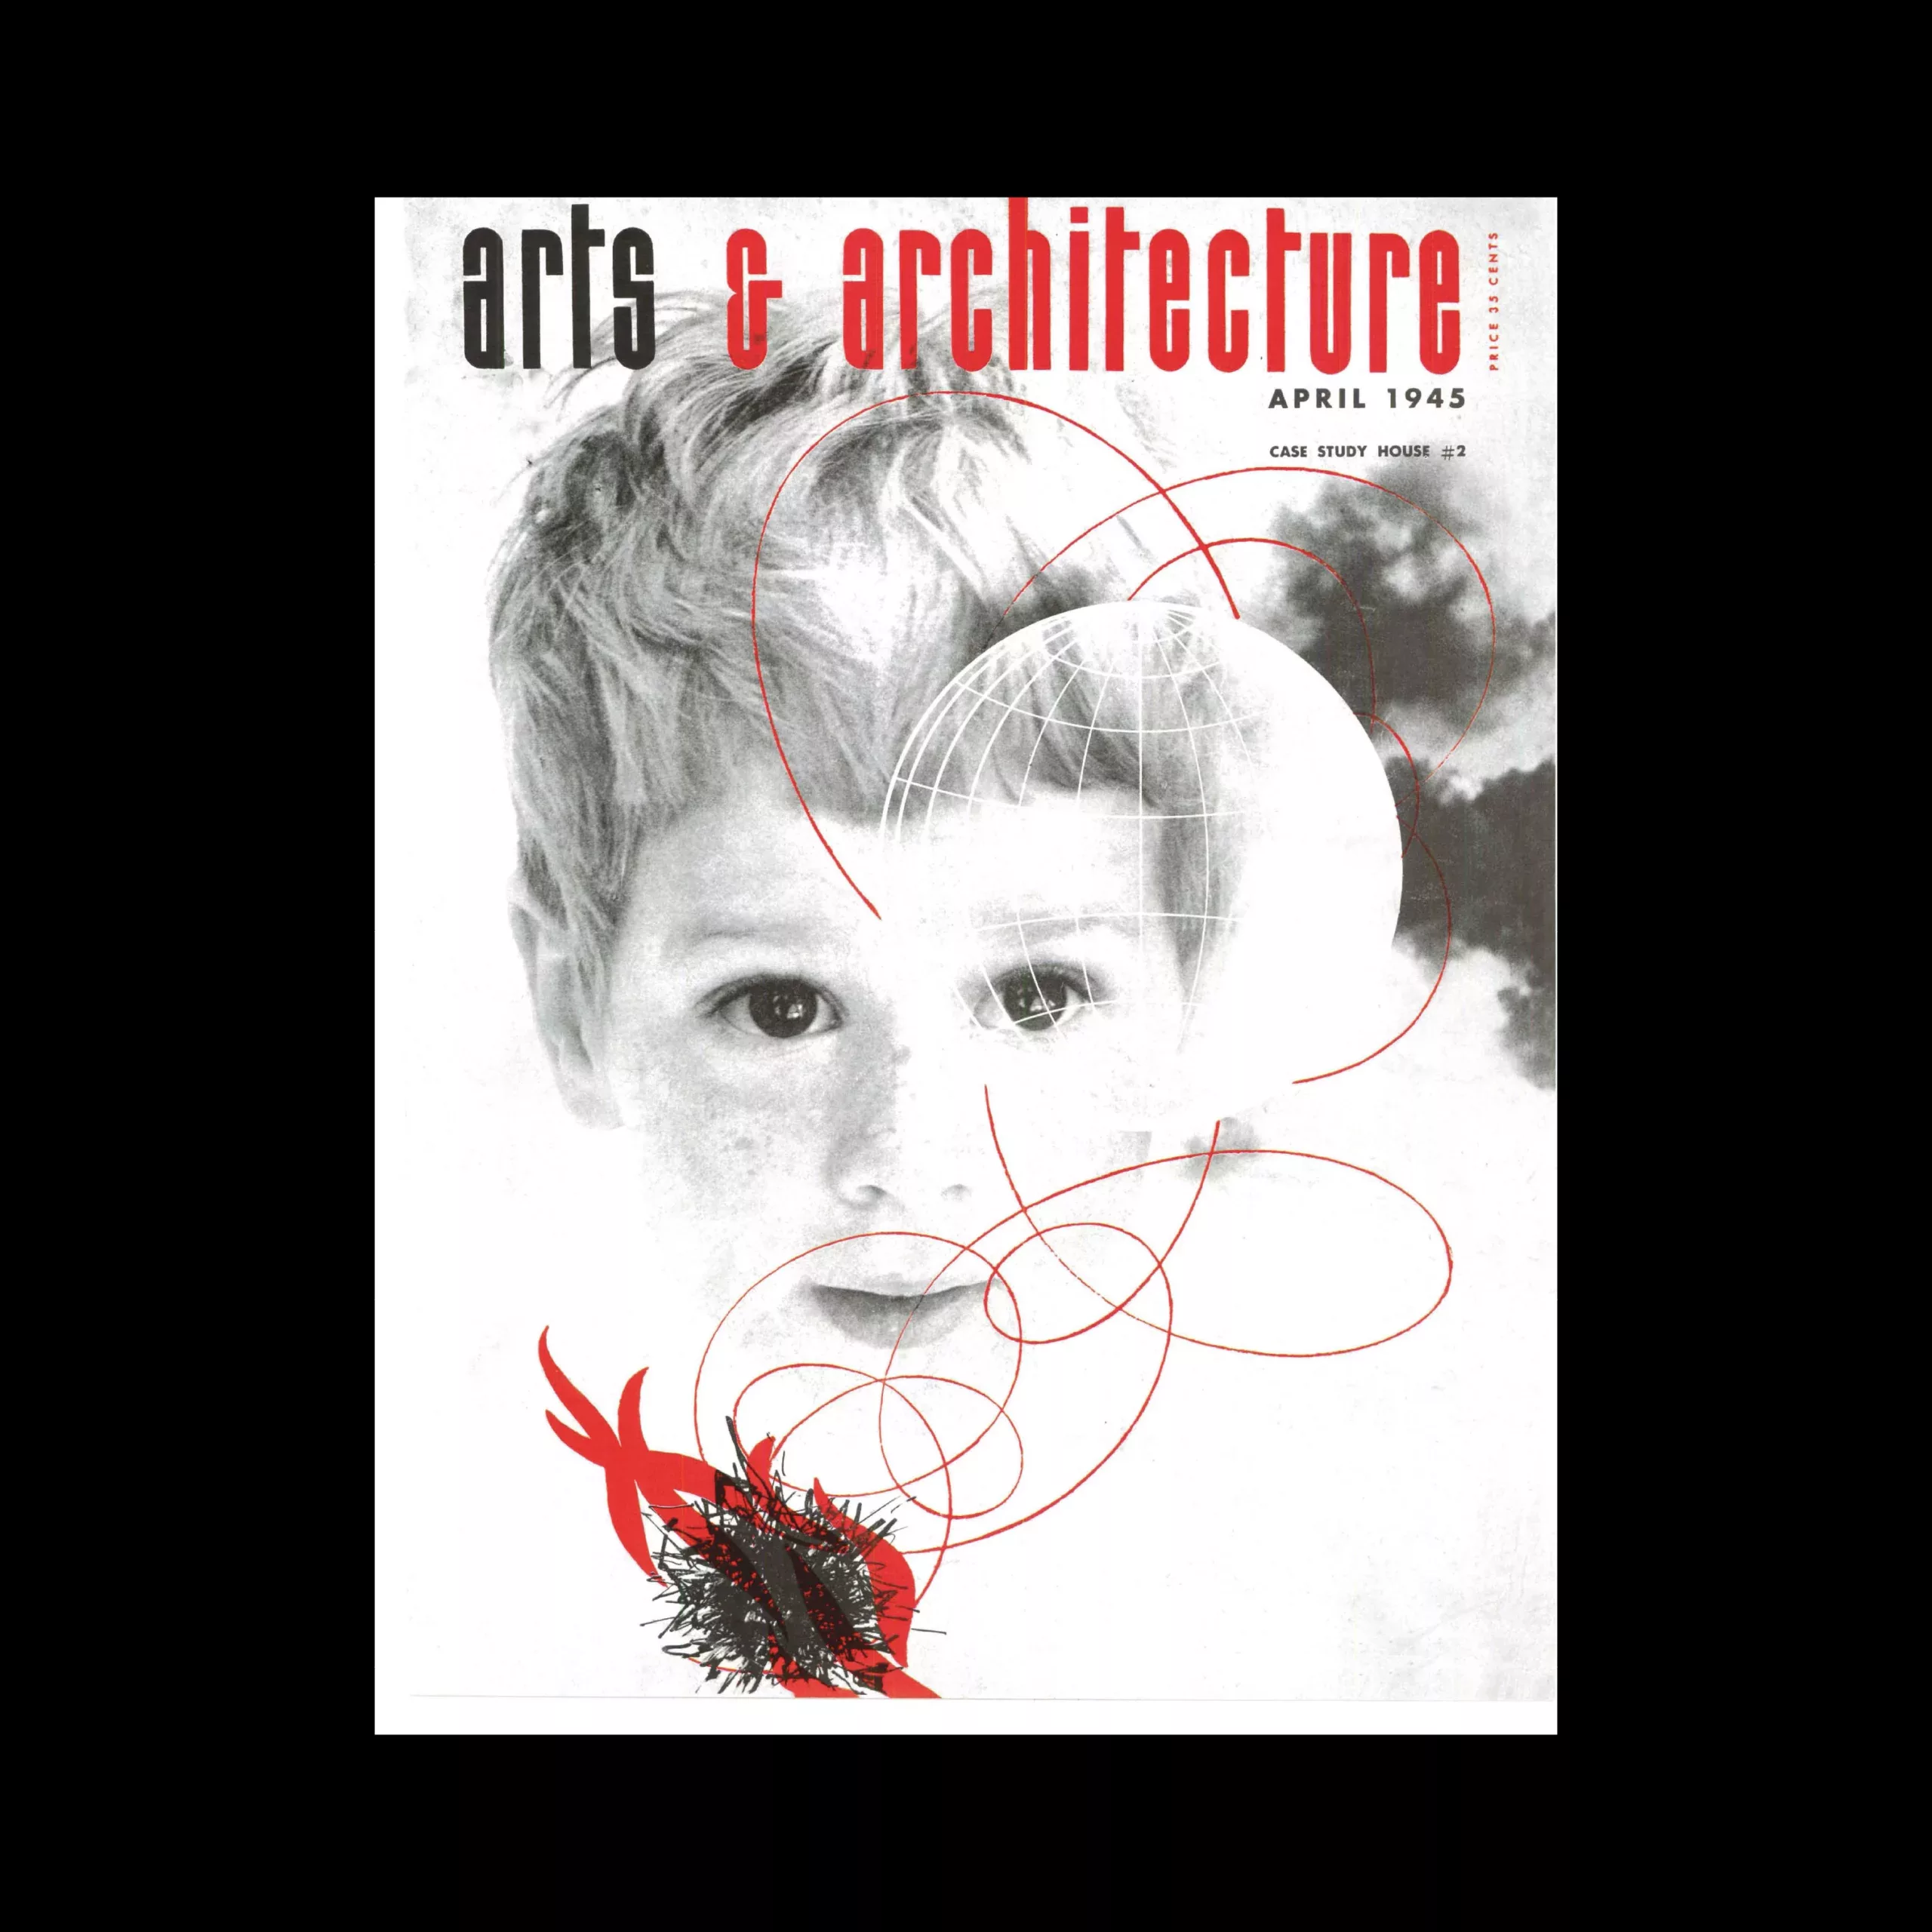 Arts & Architecture April 1945, Complete Reprint, Taschen, 2008. Cover design by Herbert Matter